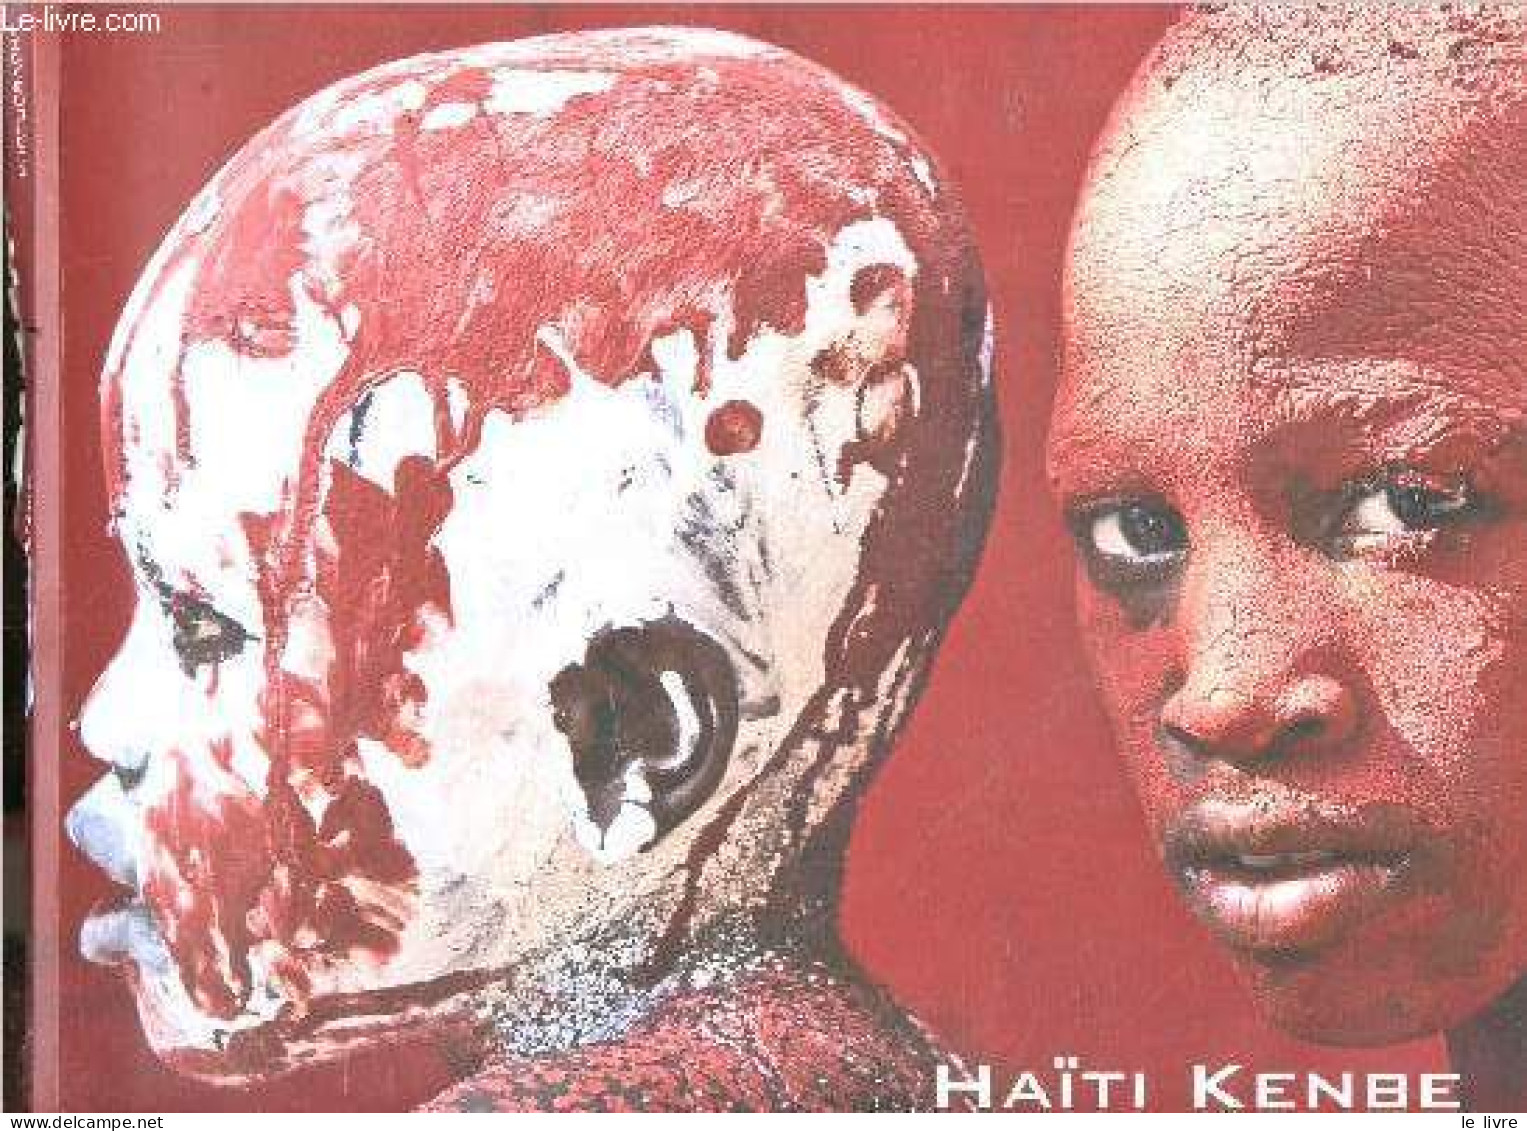 Haiti Kenbe - Ayiti, Kenbe Pa Lage ! - Benjamin - Jacques Martin Philippson - 2010 - Fotografie